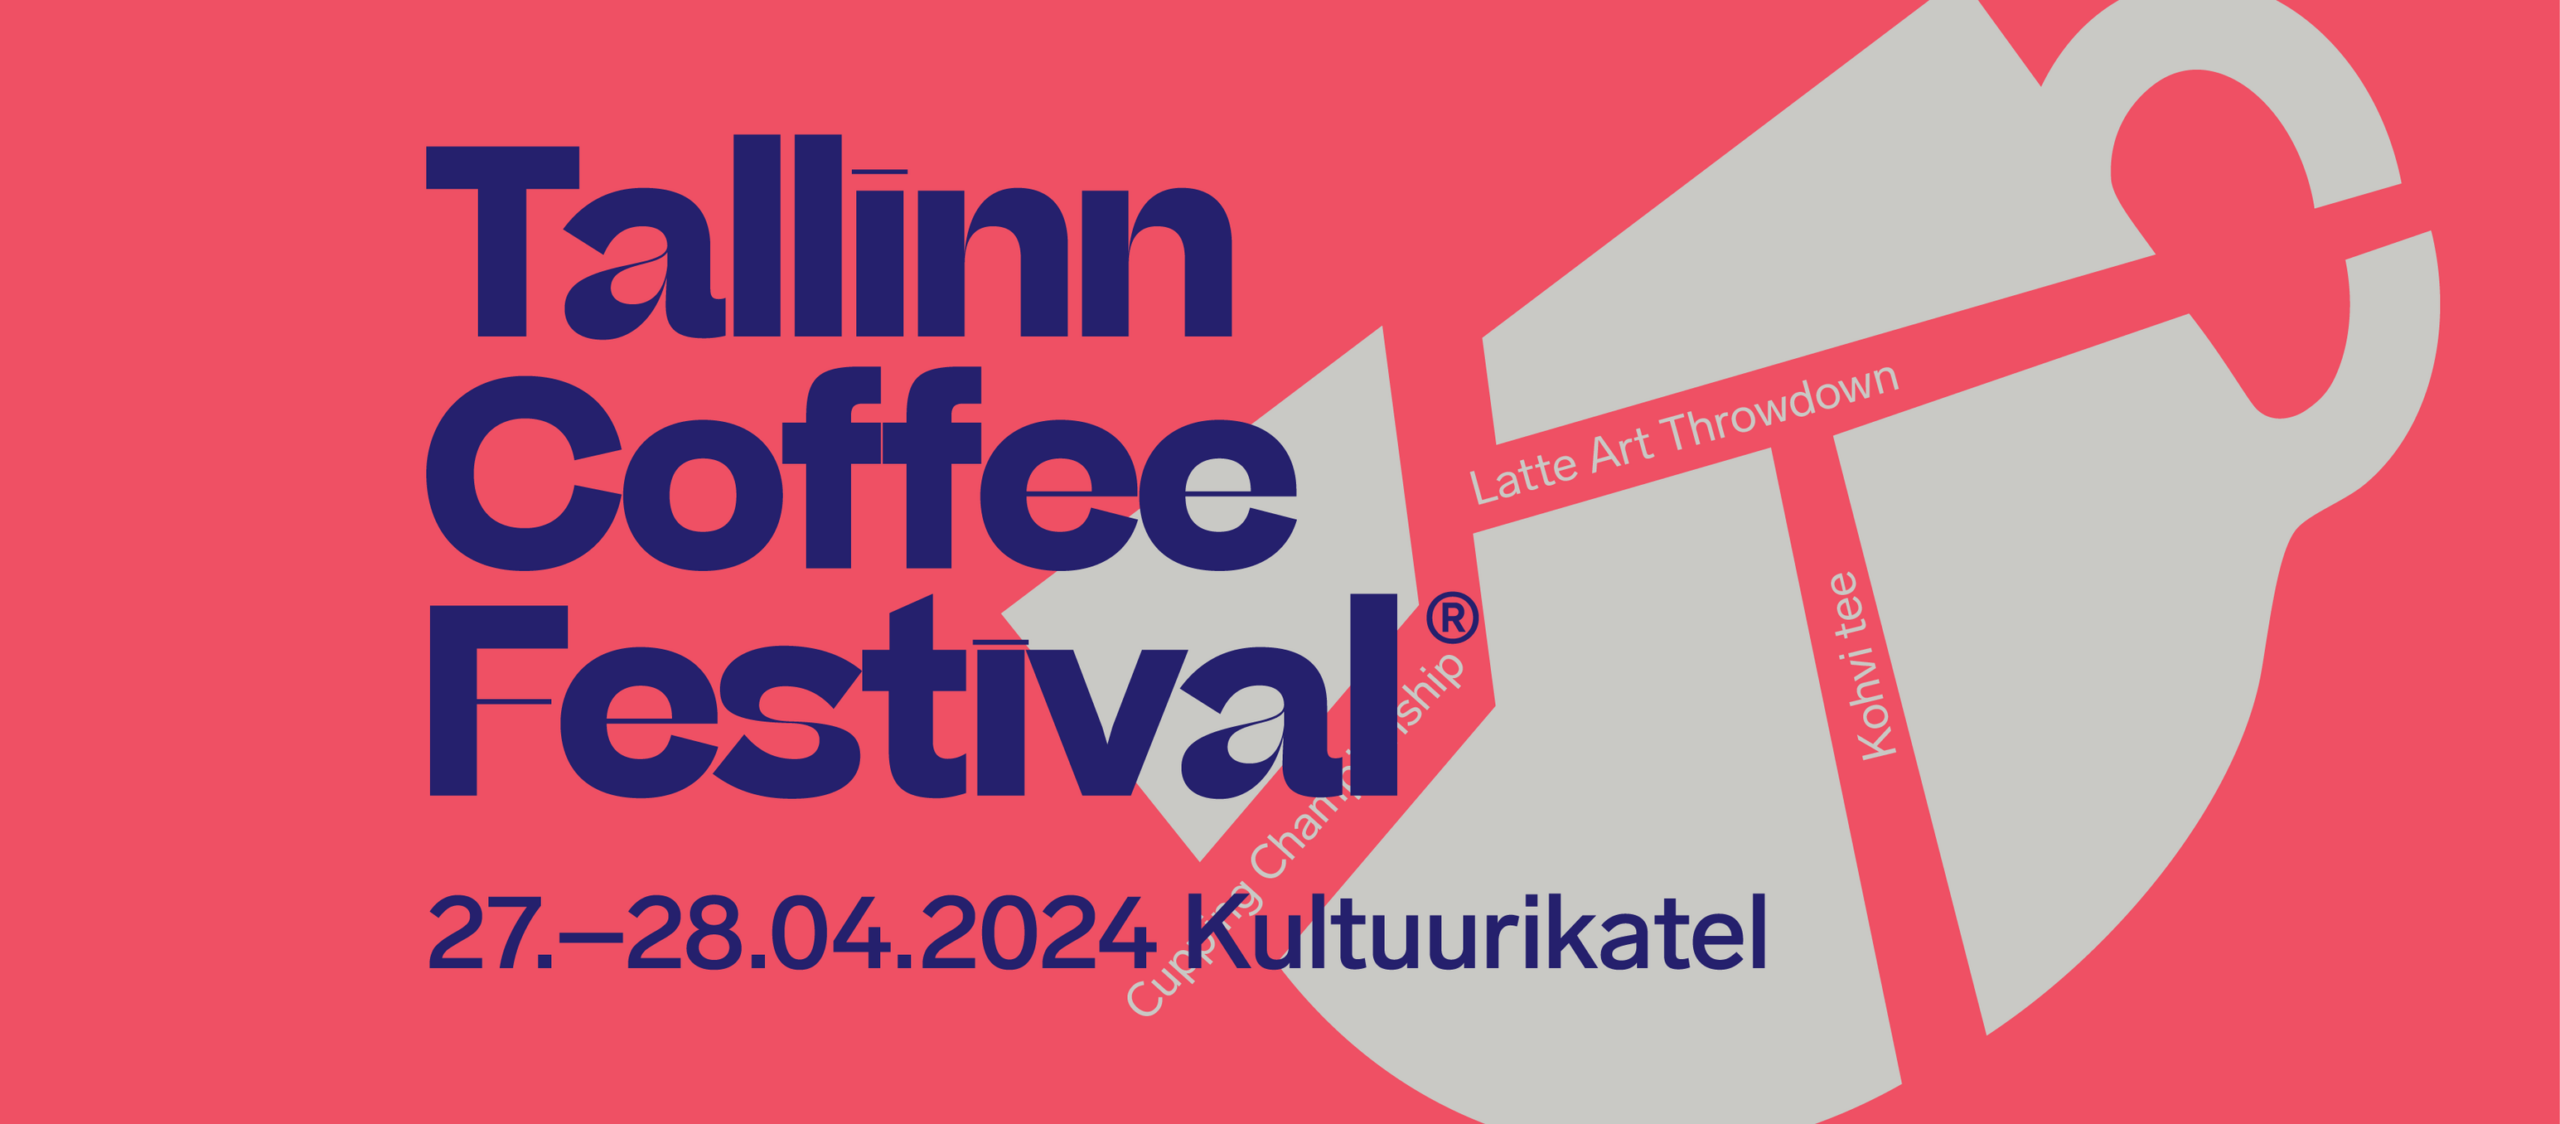 16775Tallinn Coffee Festival